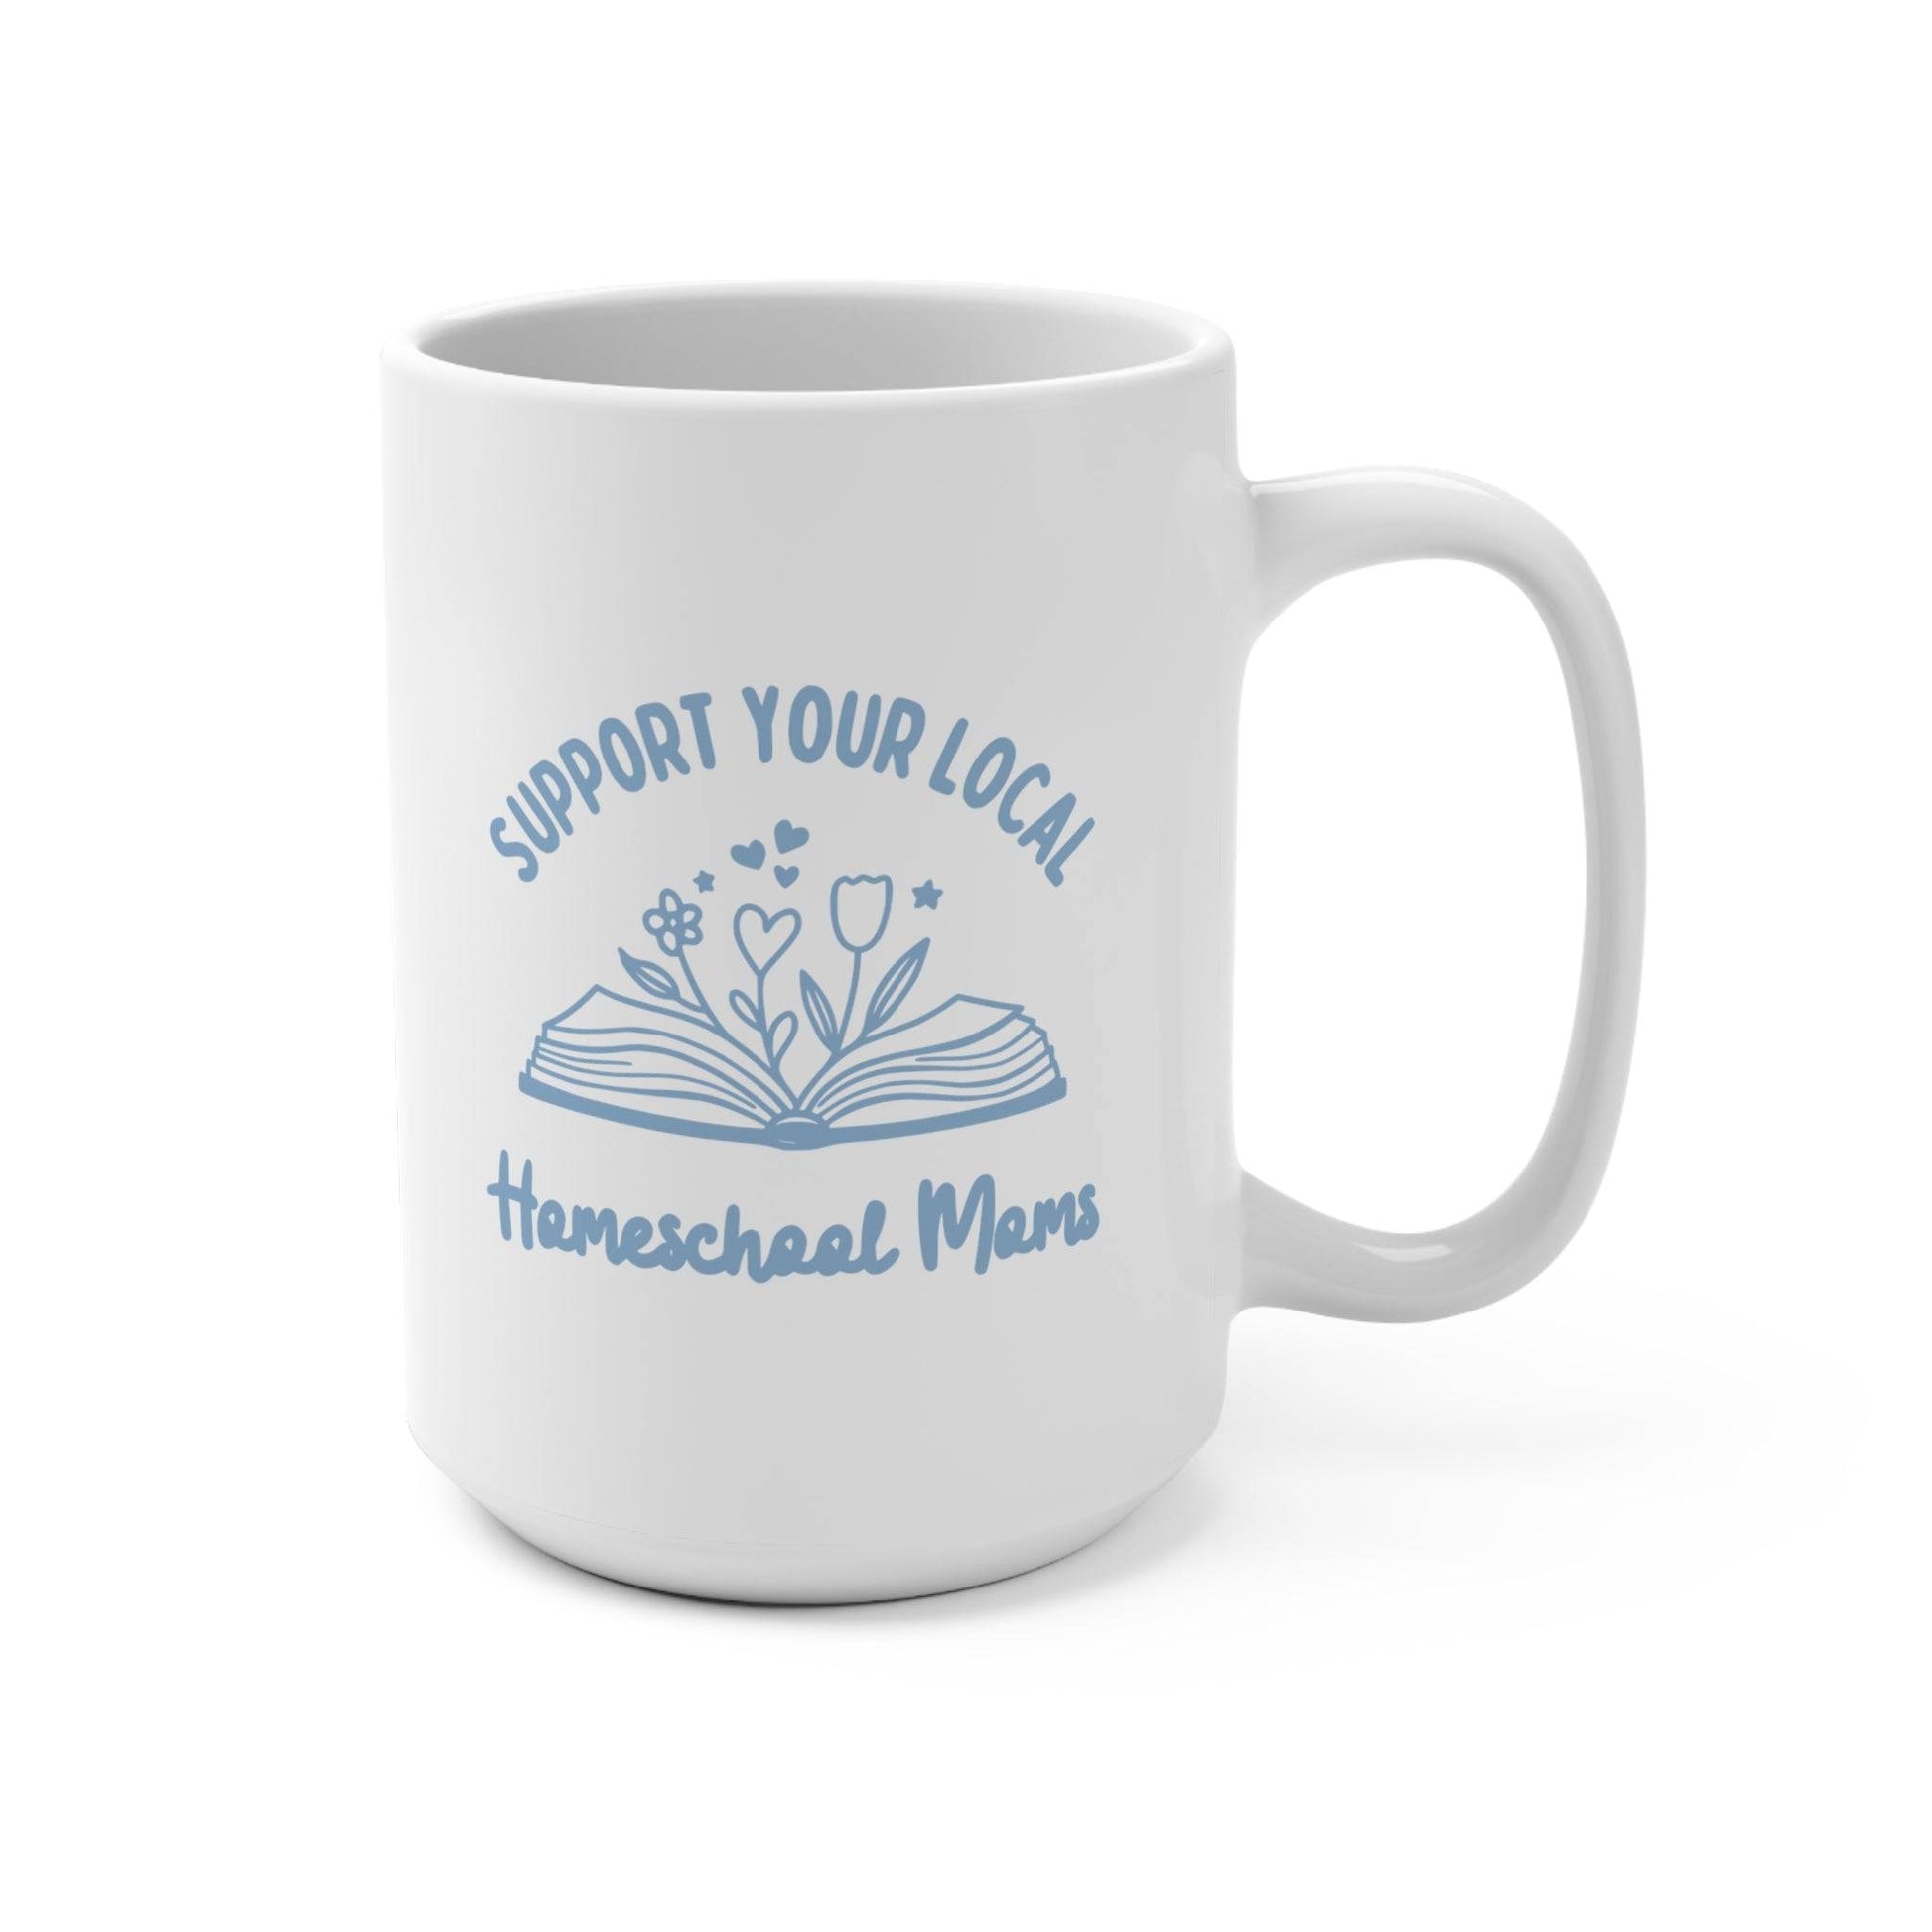 Support Your Local Homeschool Moms Mug 15oz